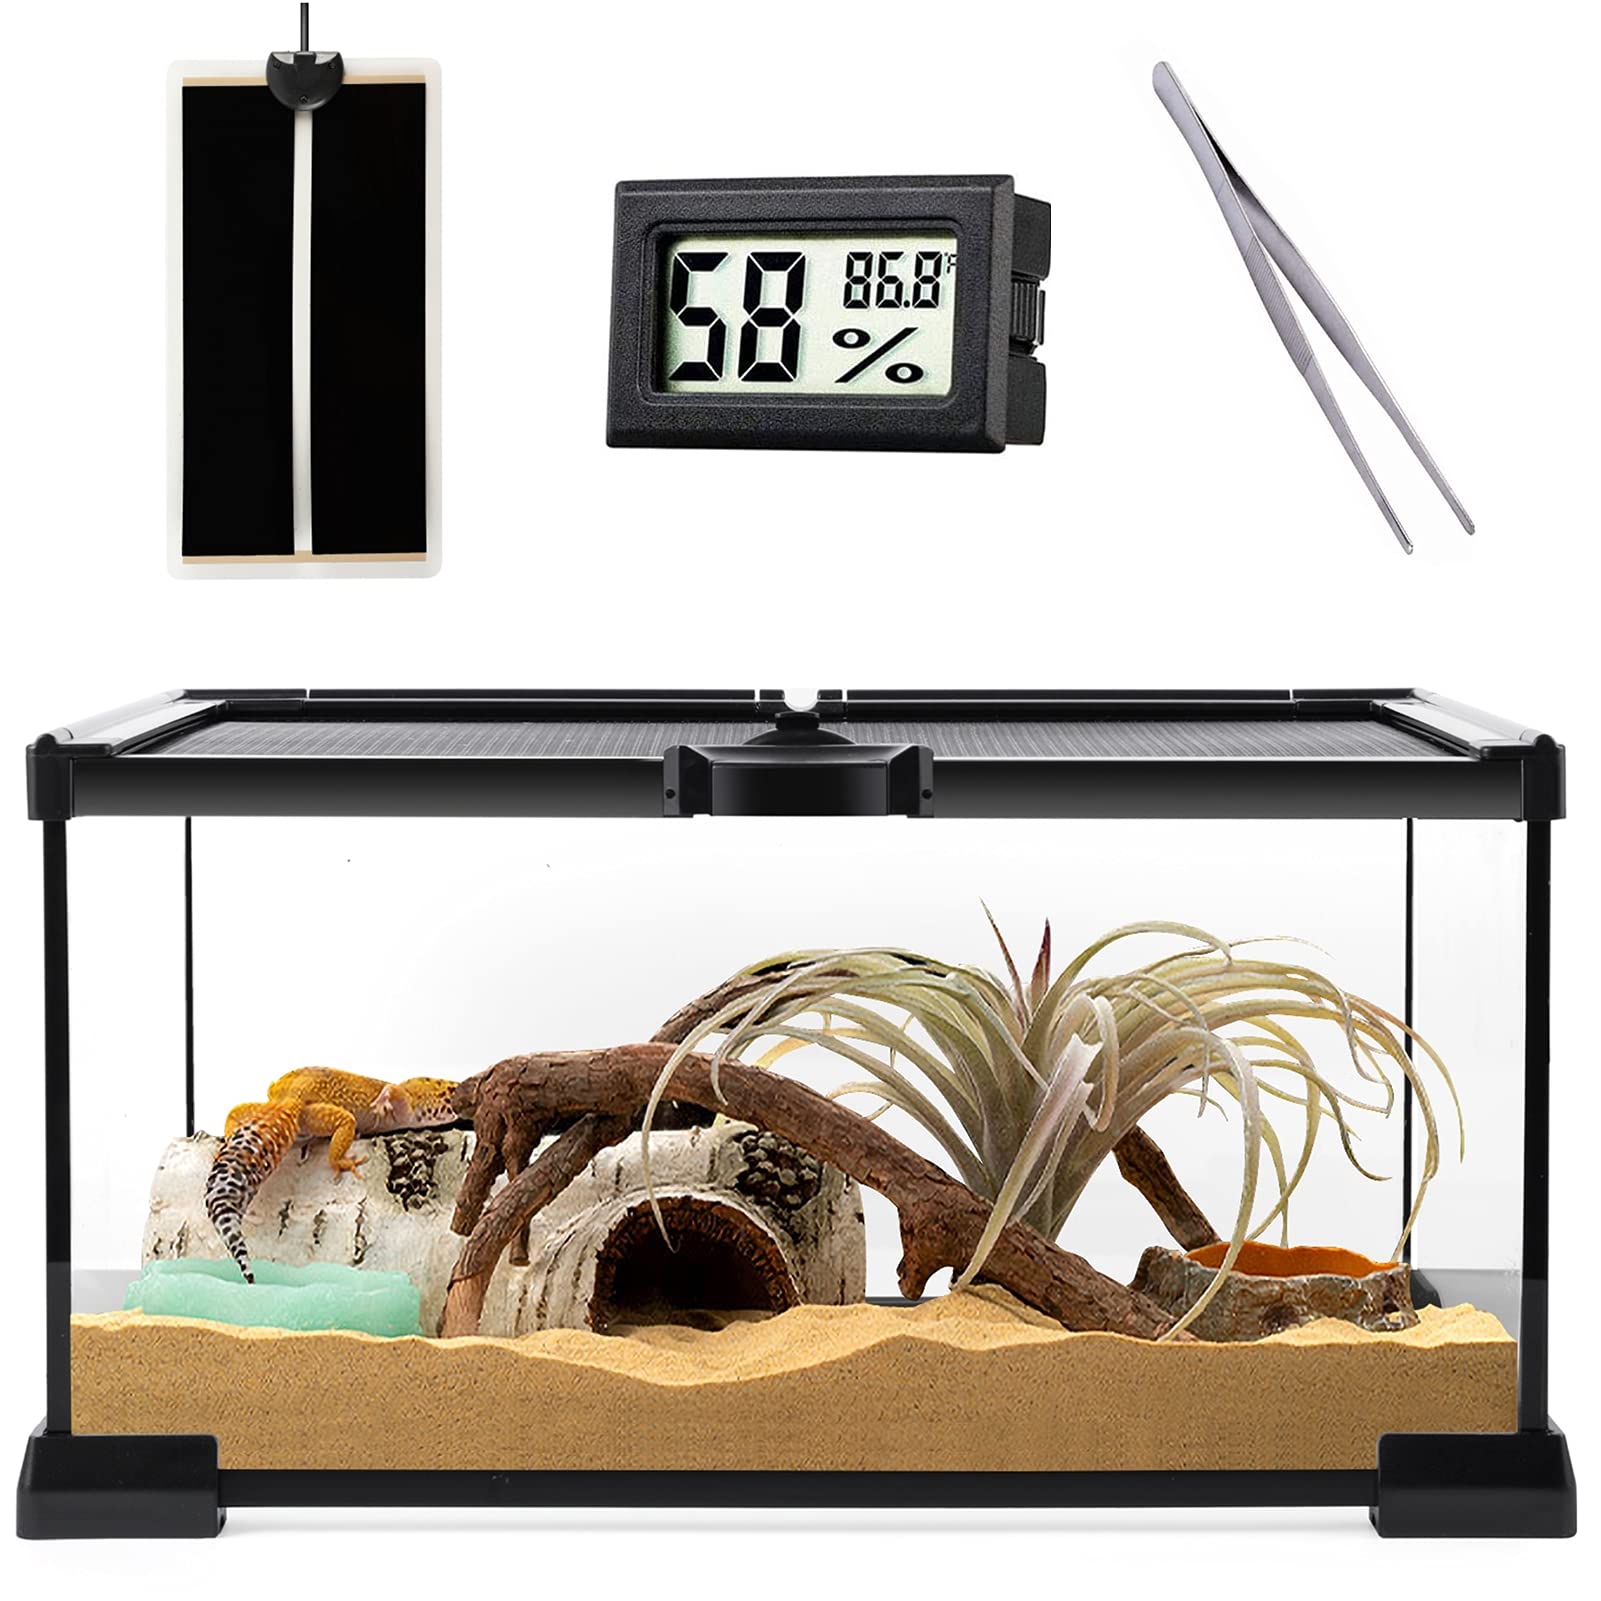 HELIME Reptile glass Terrarium - Amphibians Habitat cages 12 x 8 x 6.3 Starter Kits Top Sliding Door Screen Ventilation Mini Tanks with